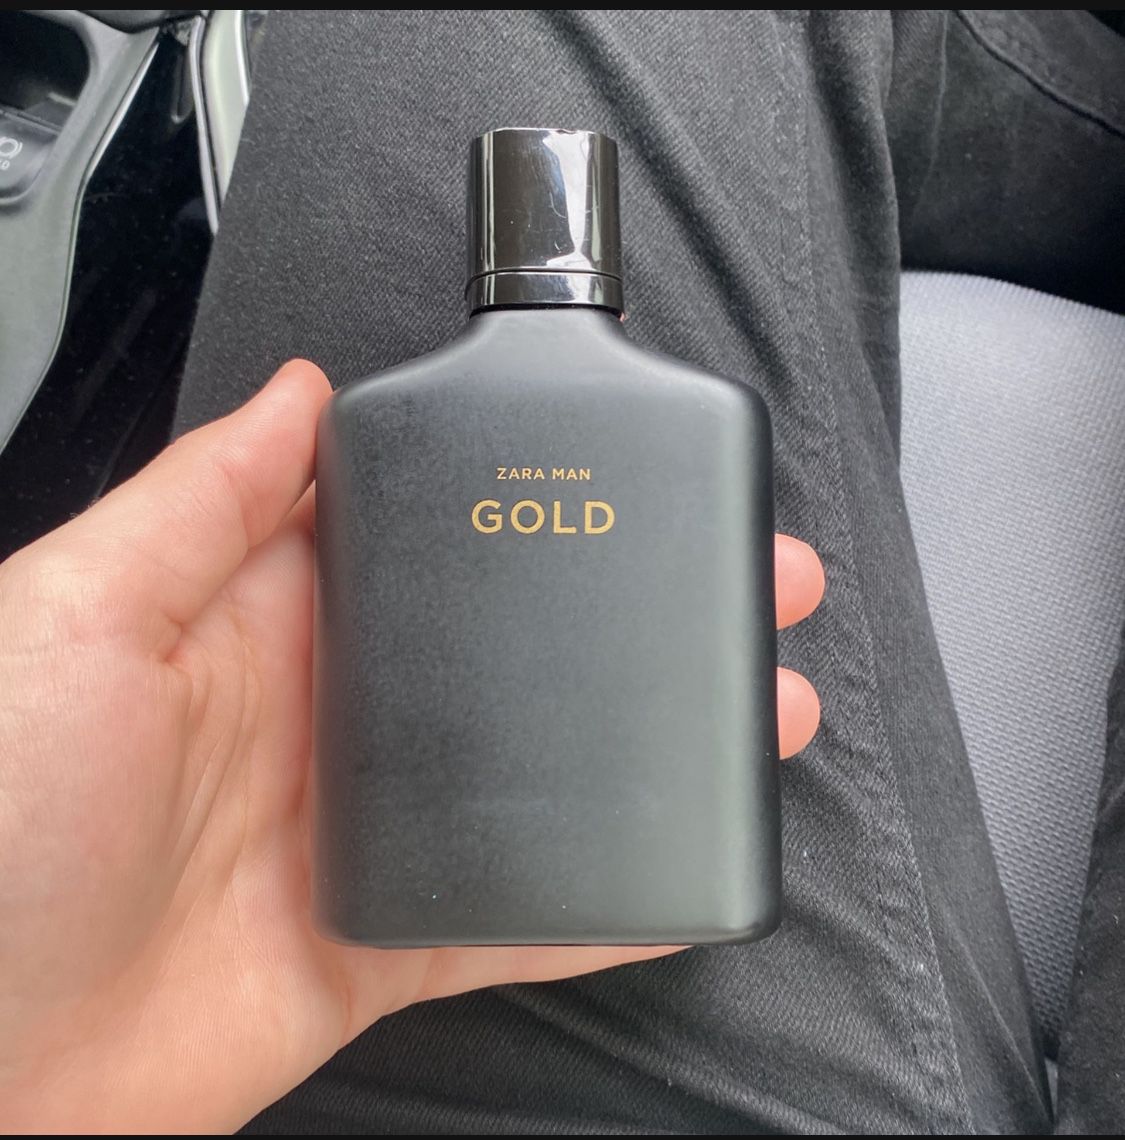 Zara Man Gold Cologne